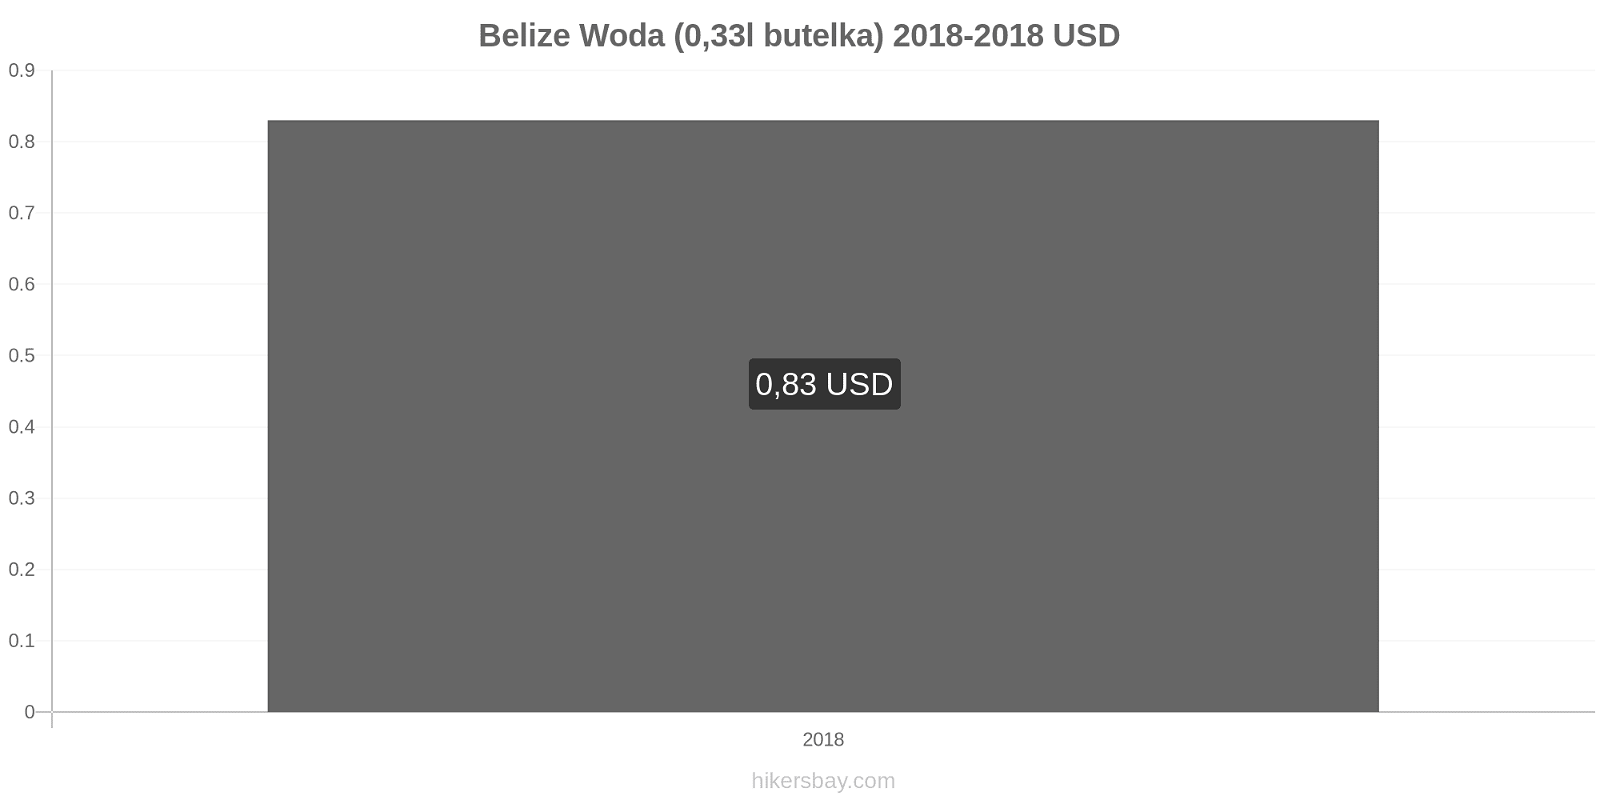 Belize zmiany cen Woda (0,33l butelka) hikersbay.com